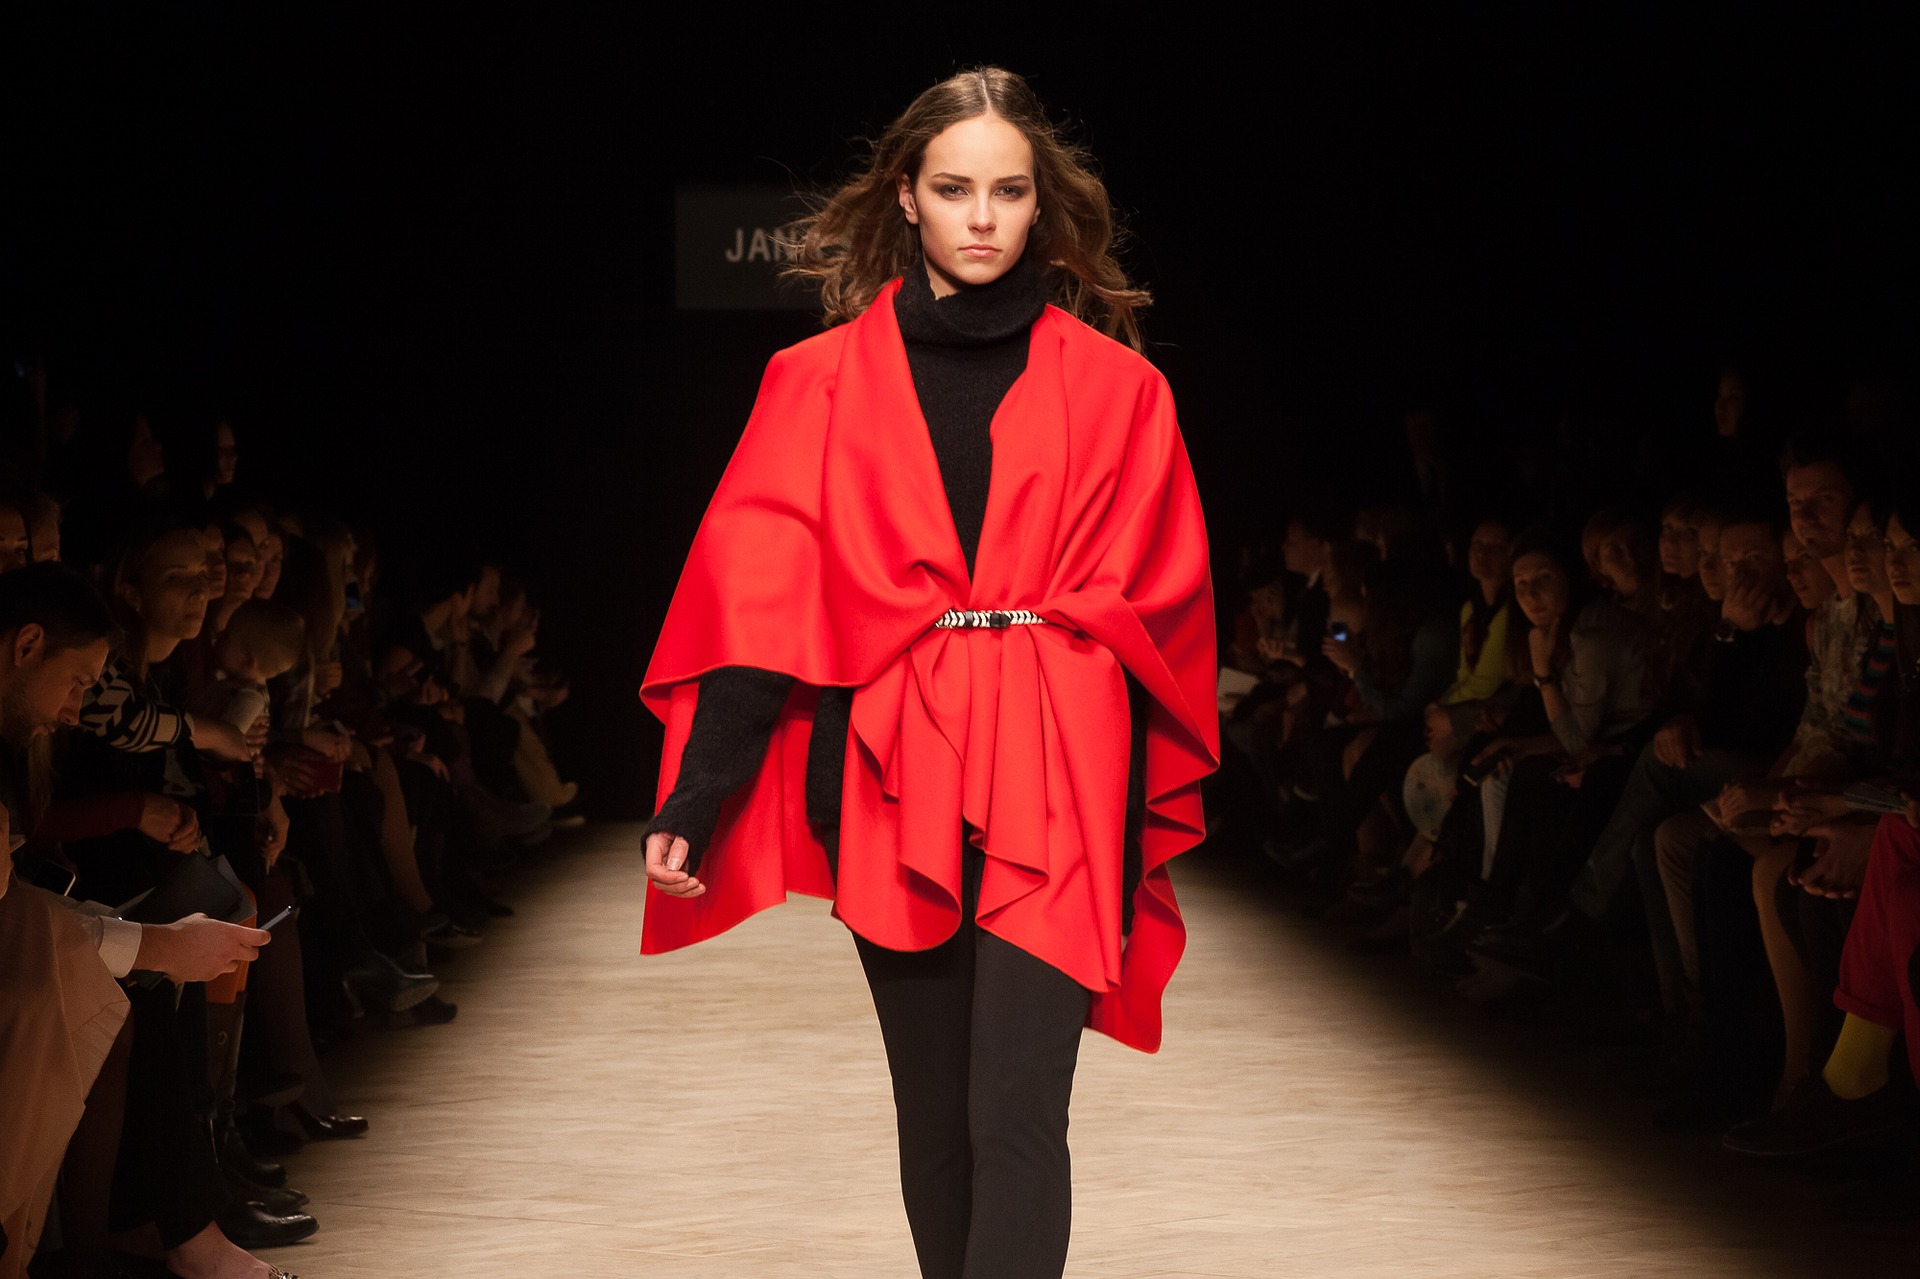 Beautiful Model Ramp Walking Wearing Long Red Dress